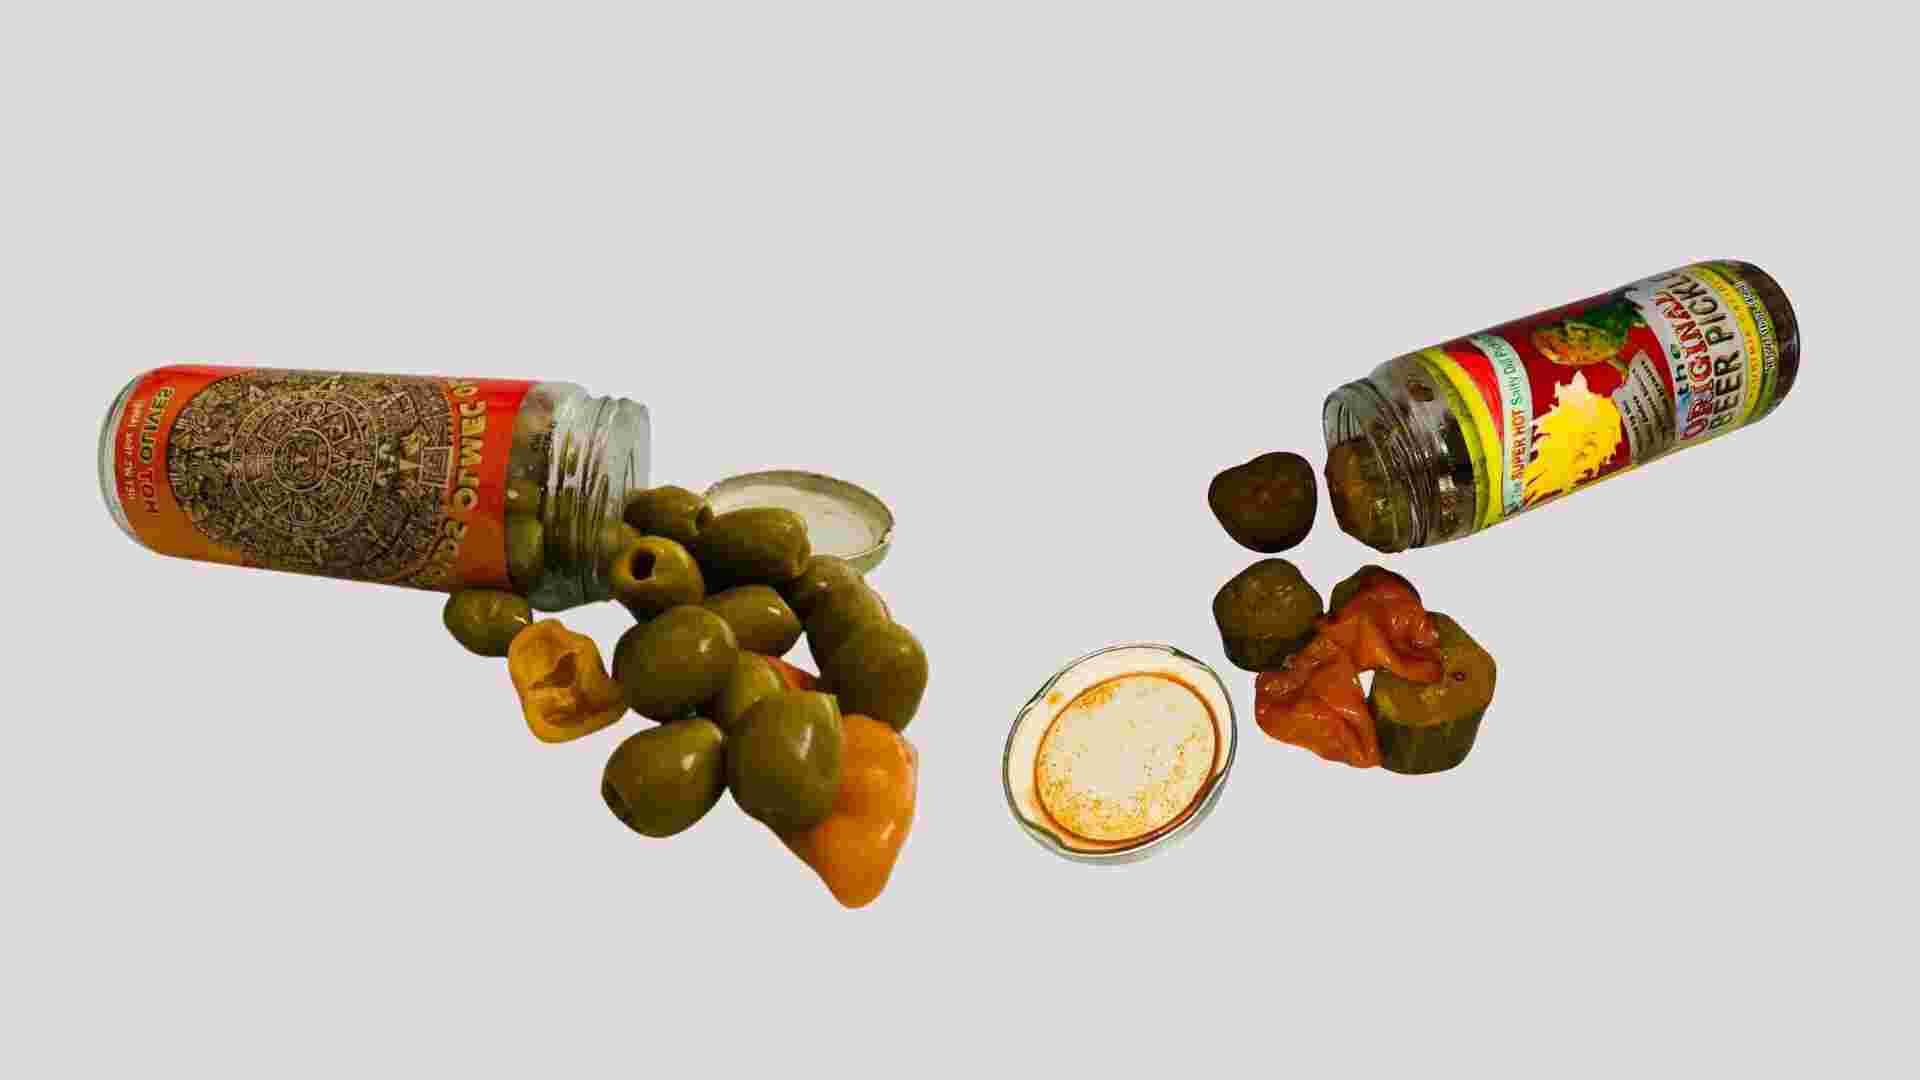 Original tasty pickles